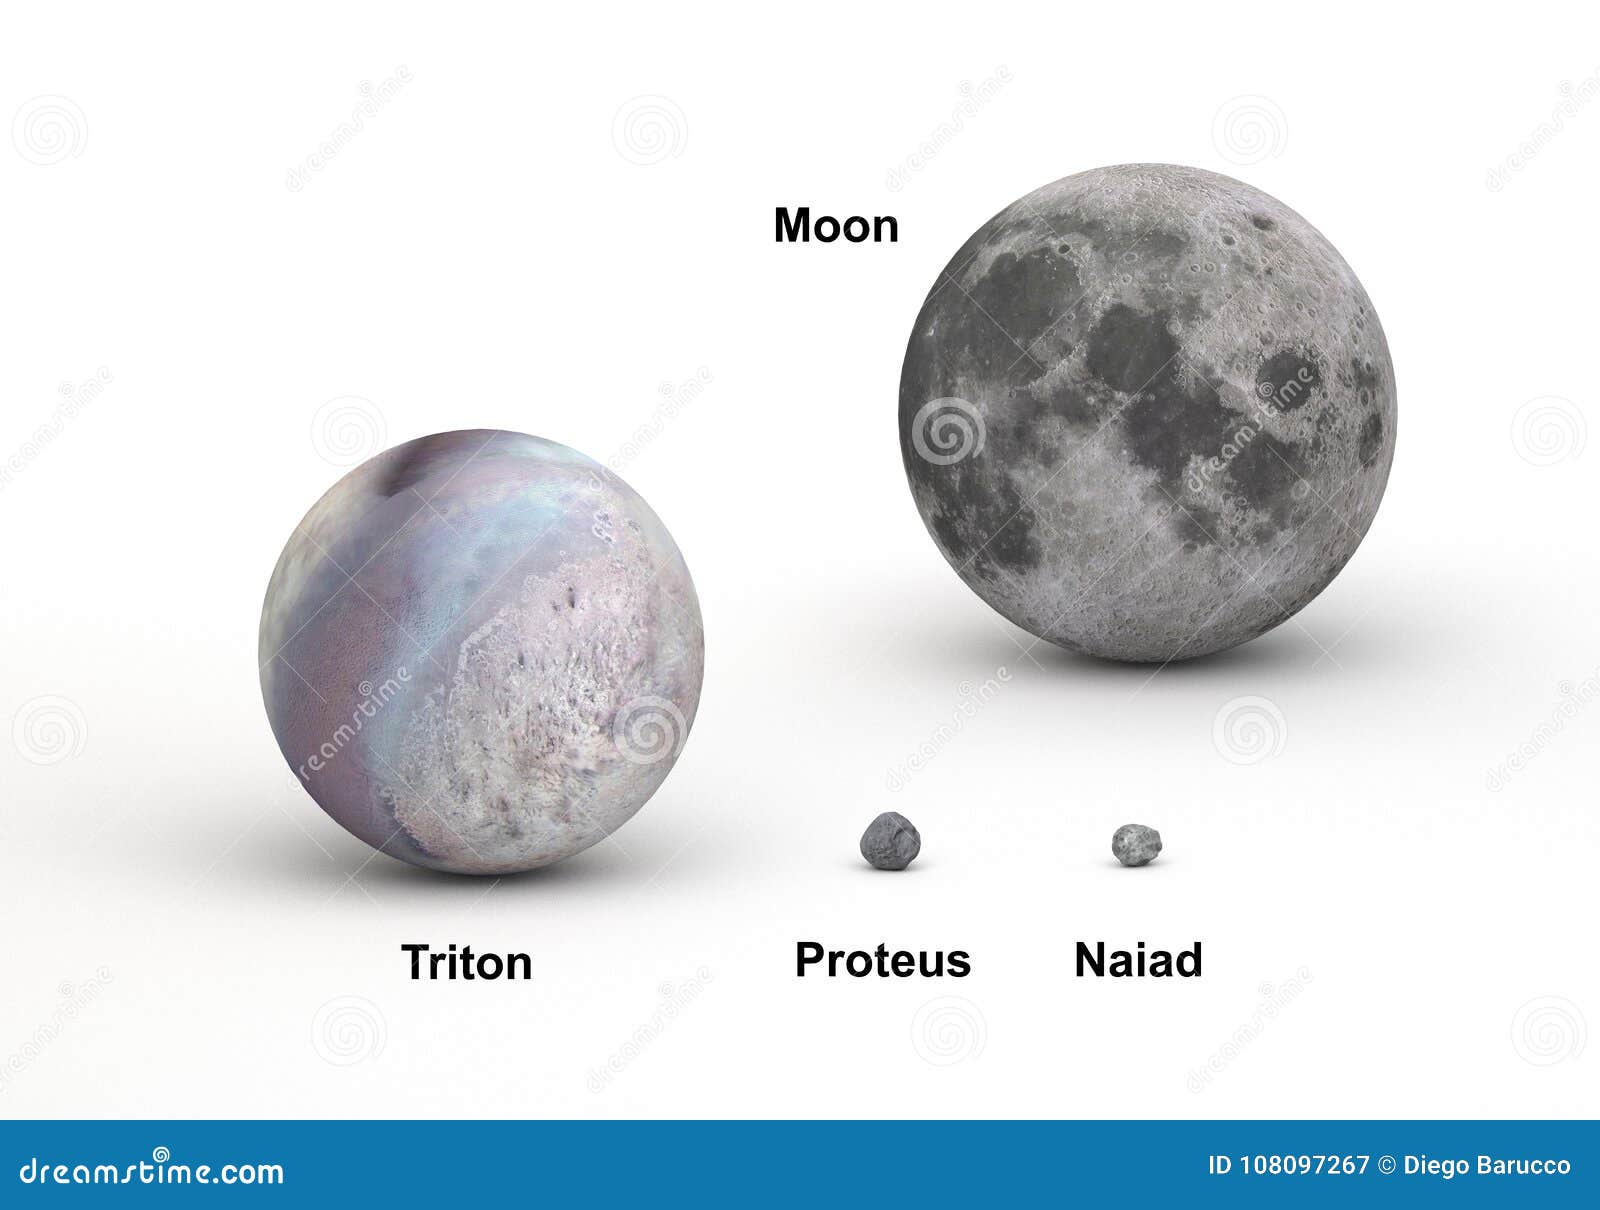 https://thumbs.dreamstime.com/z/neptune-moons-earth-moon-size-comparison-image-represents-main-precise-scientific-design-d-rendering-108097267.jpg